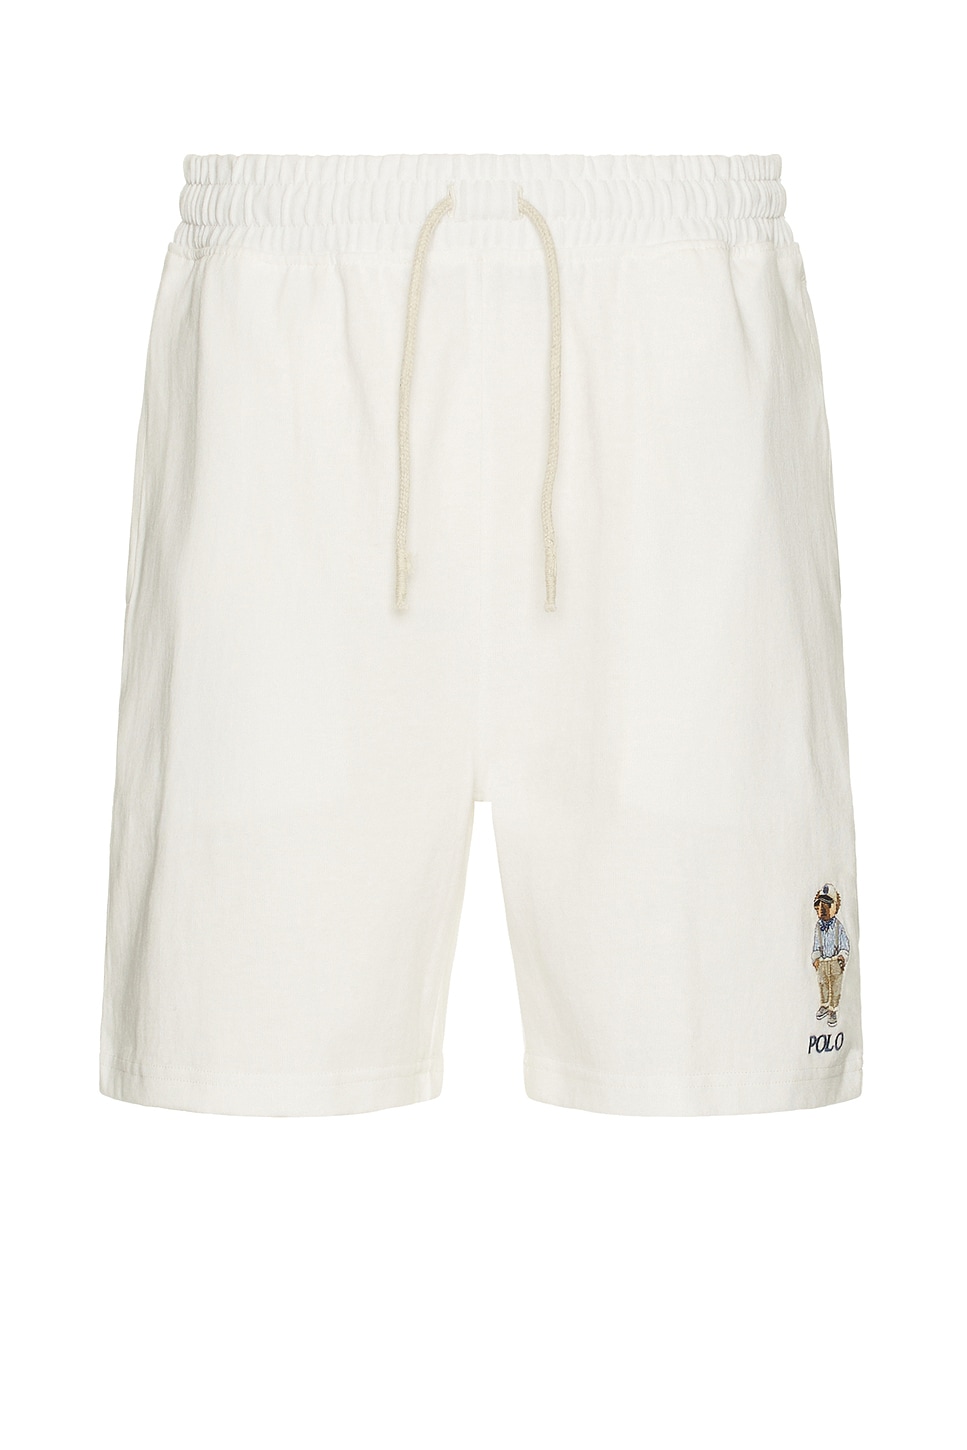 Image 1 of Polo Ralph Lauren Knit Short in Deckwash White Hmgwy Bear